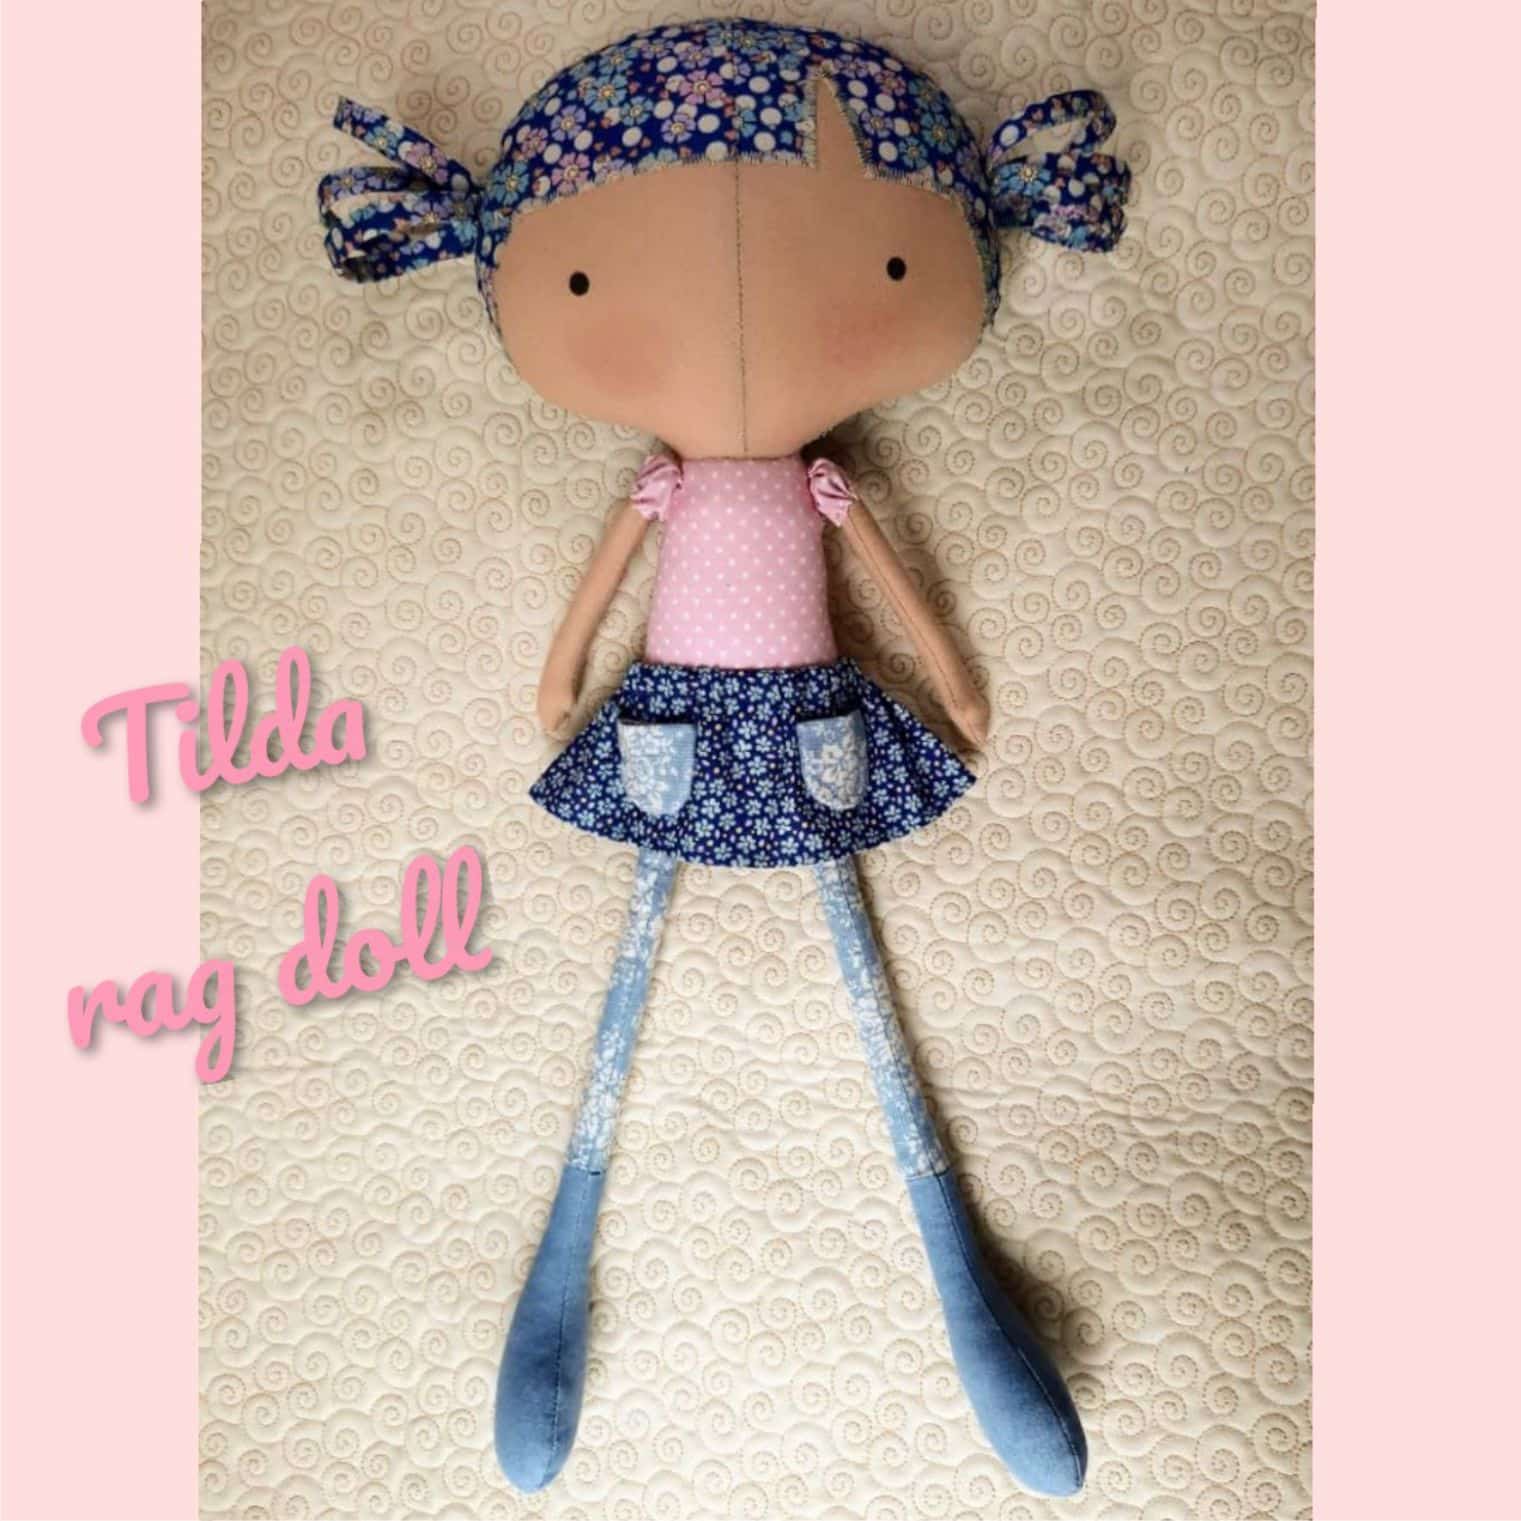 rag doll pattern